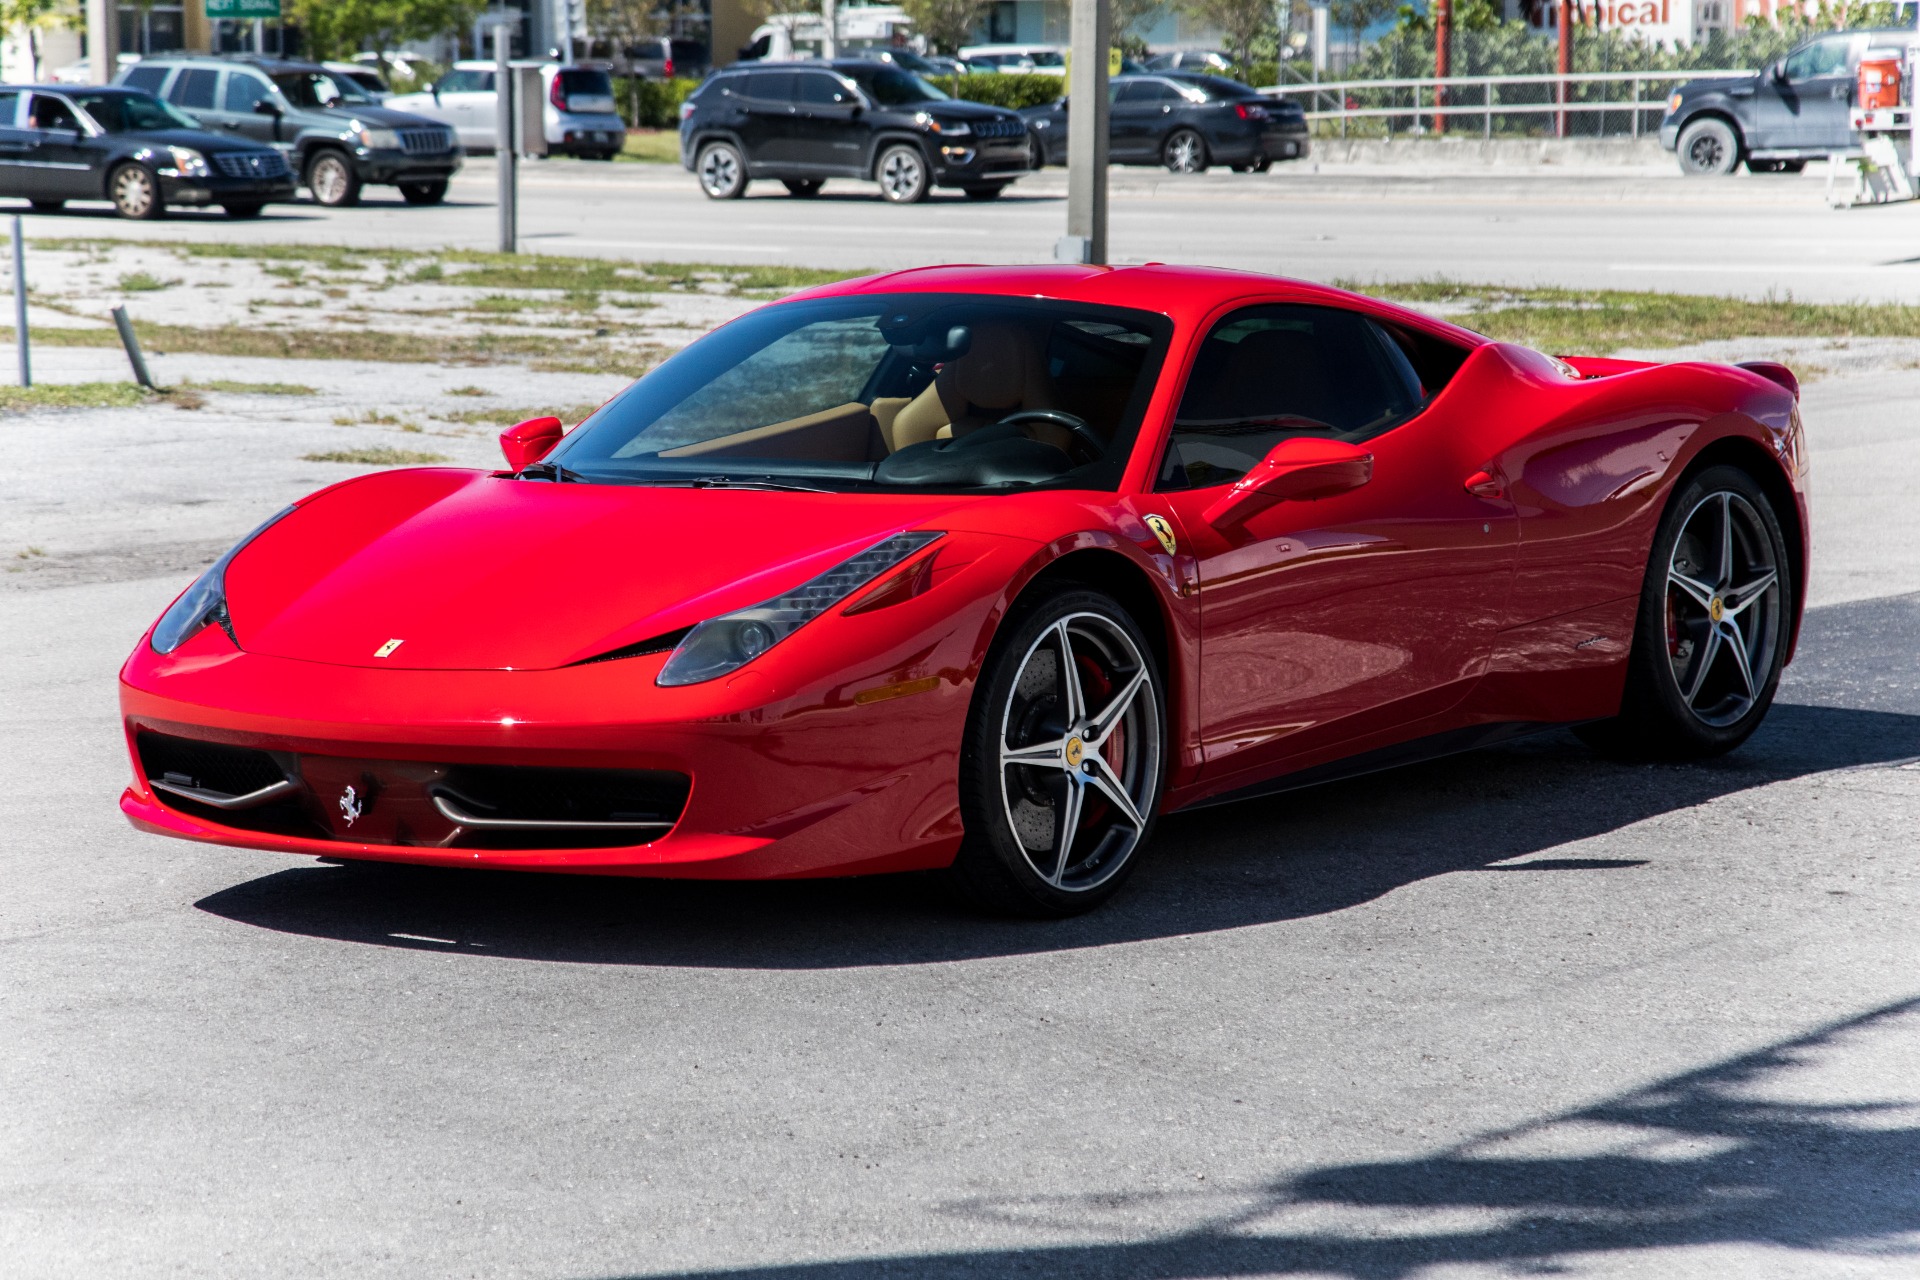 Used 2014 Ferrari 458 Italia For Sale 184 900 Marino Performance Motors Stock 196849